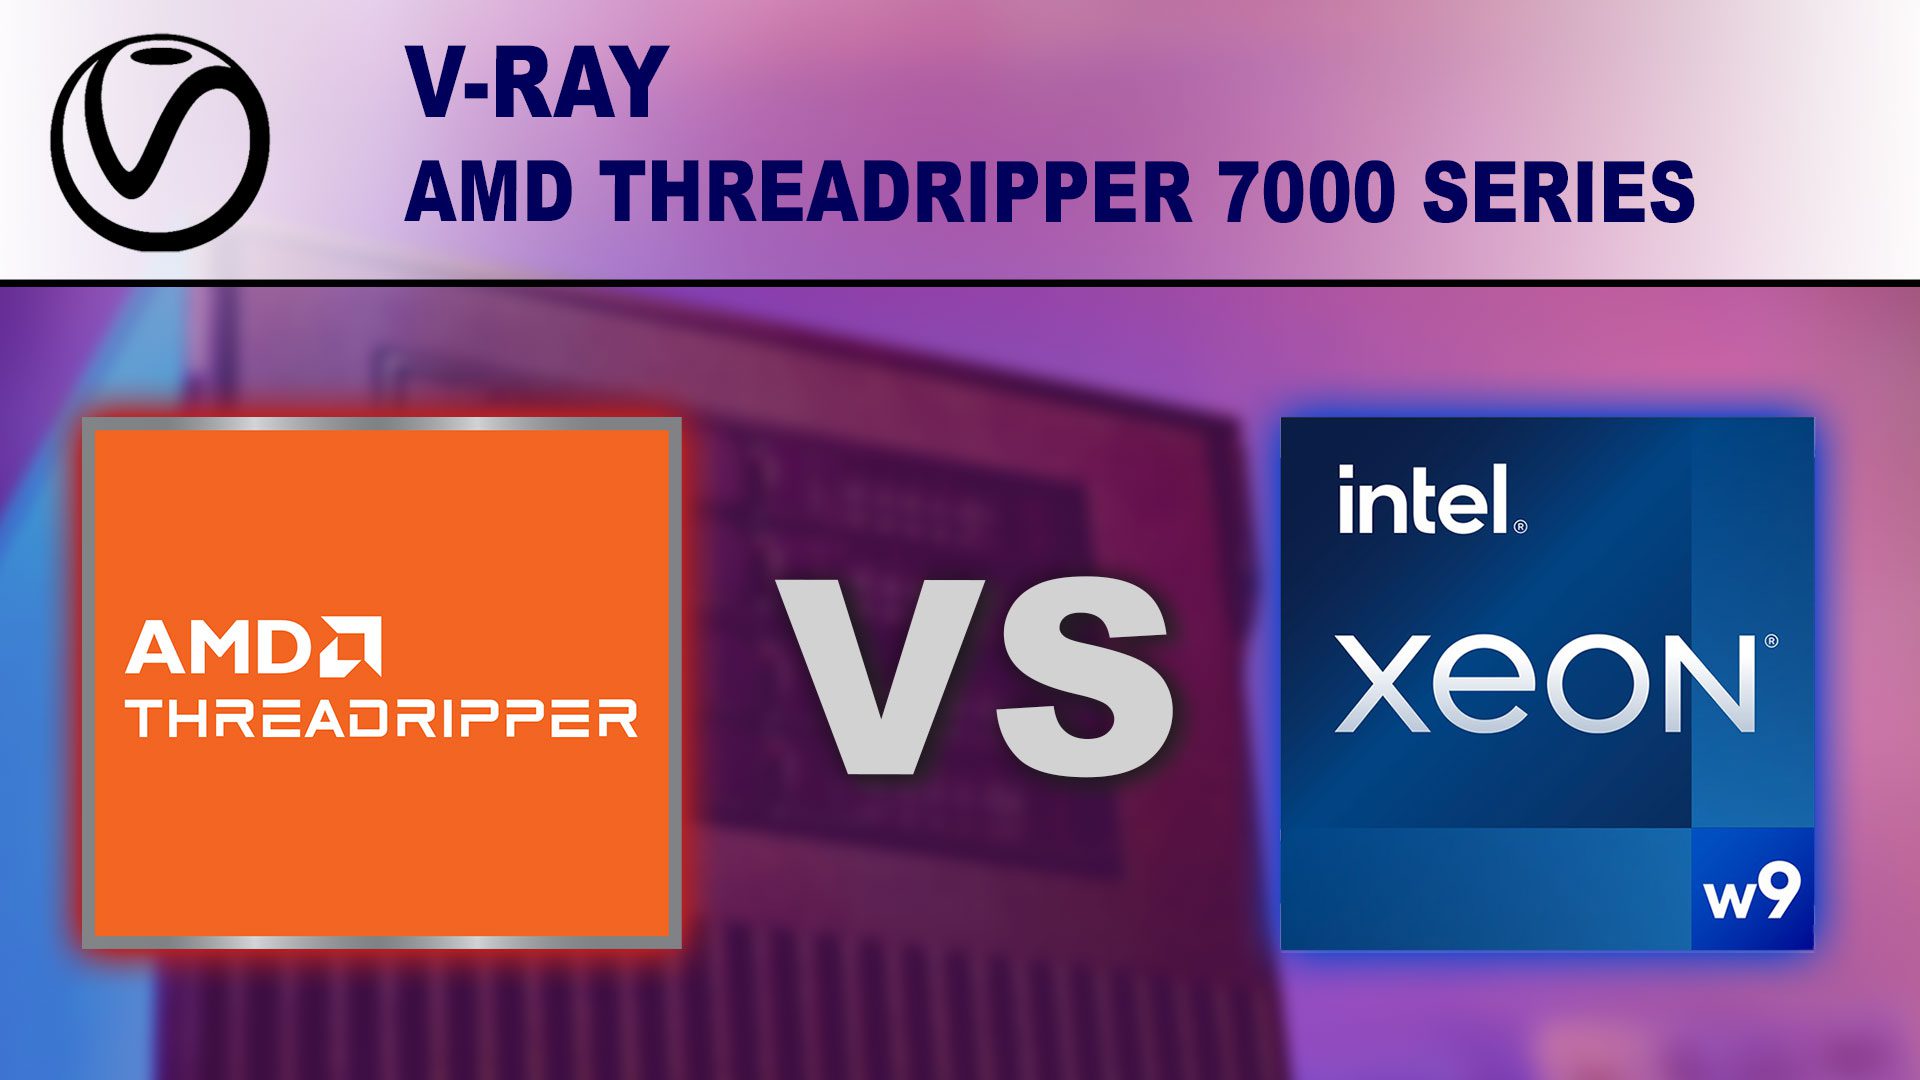 Decorative Image: V-Ray - AMD Threadripper vs Intel Xeon